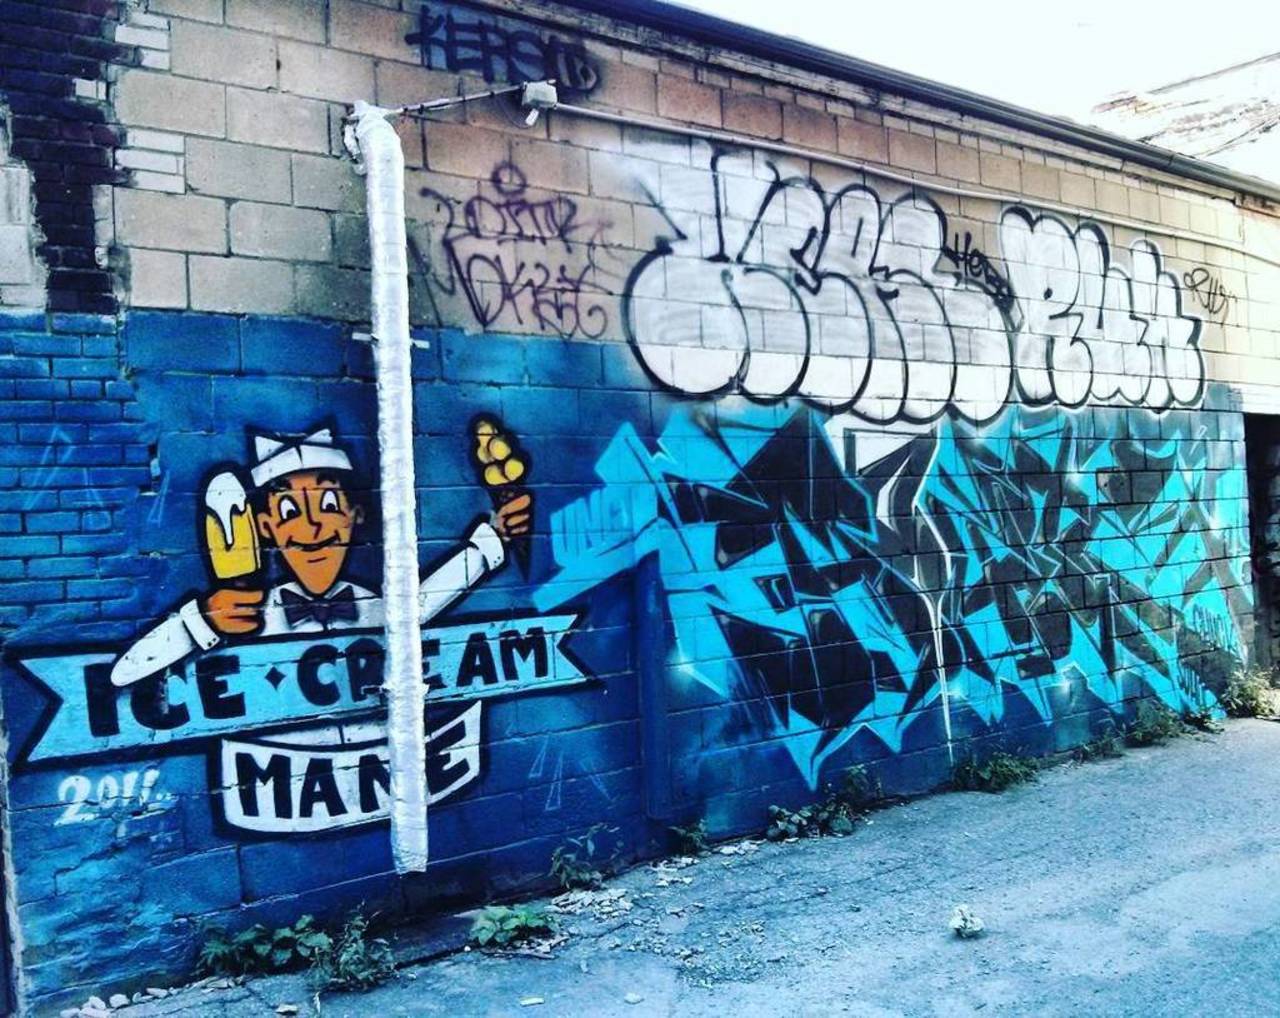 via #graff_n_such "http://bit.ly/1jBfit2" #graffiti #streetart https://t.co/HhJG8y1OKt